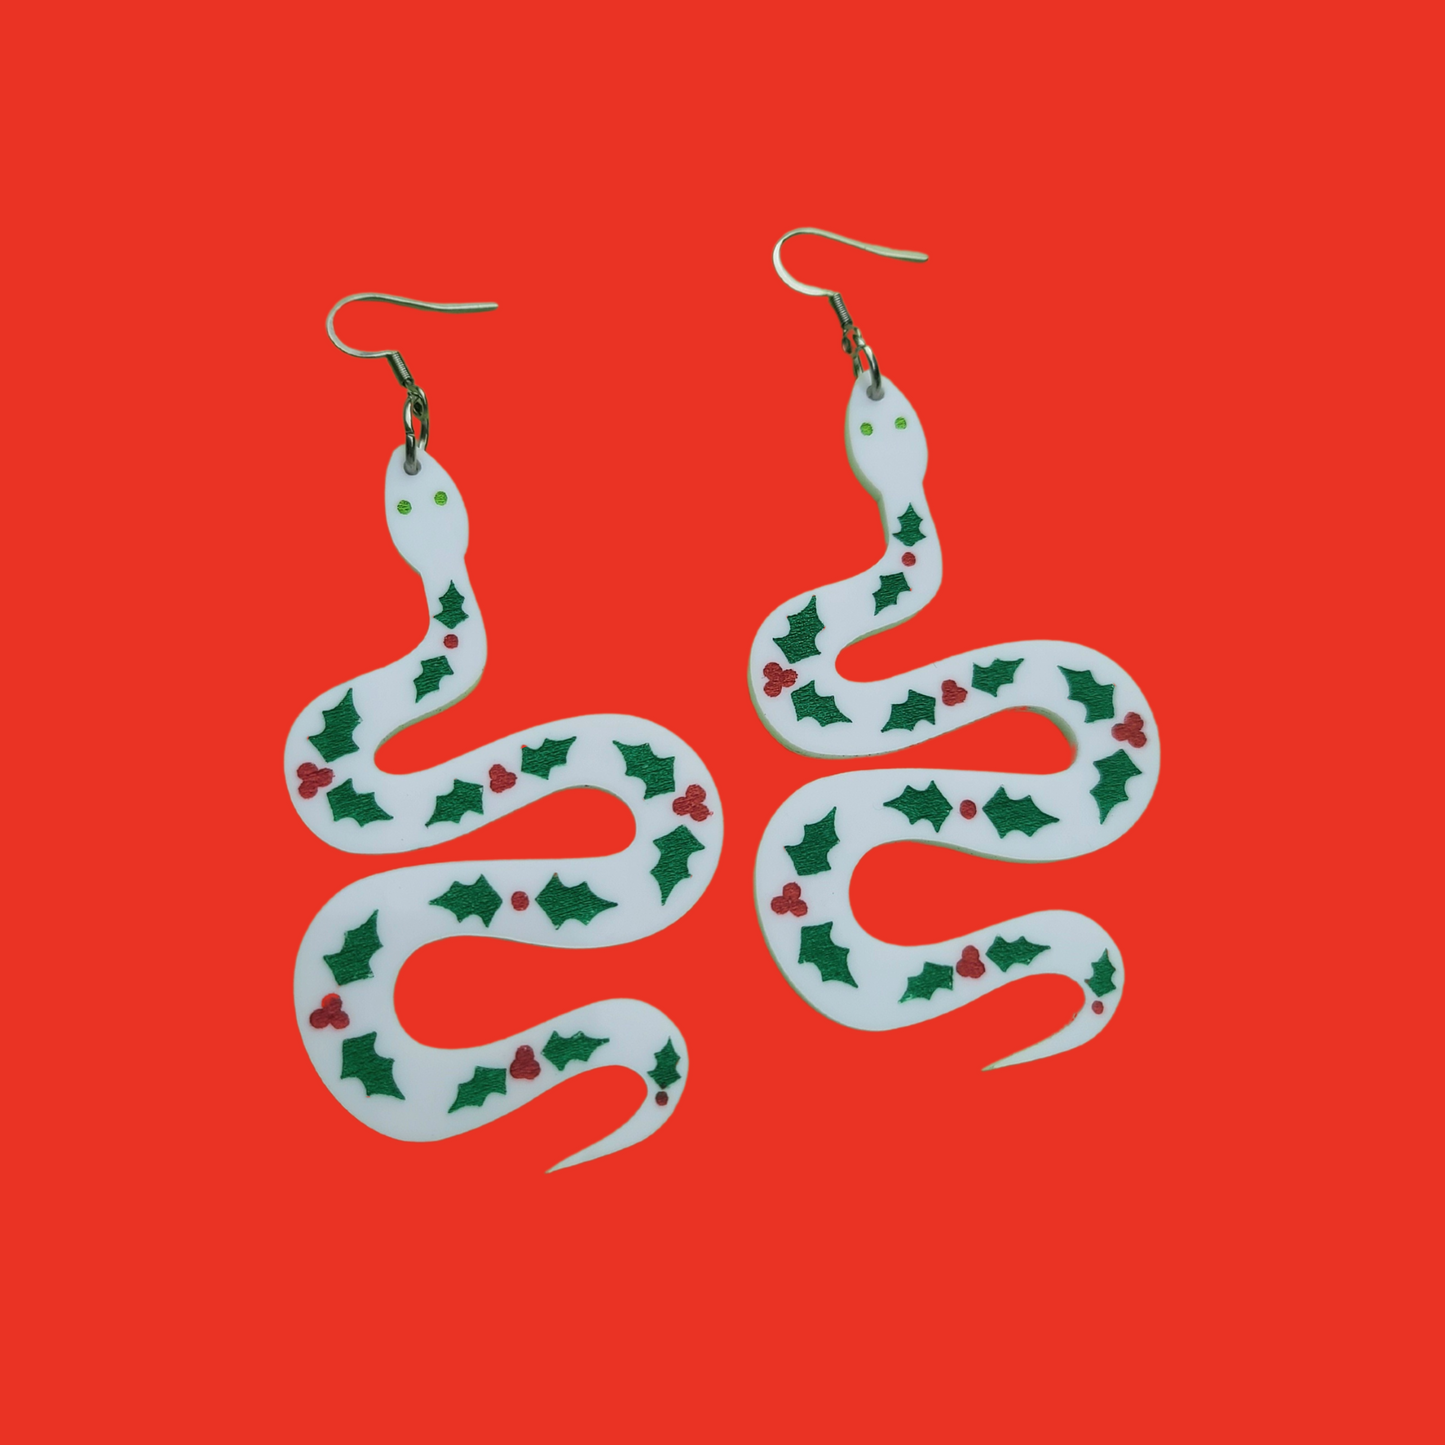 Christmas Snakes with Holly - Christmas